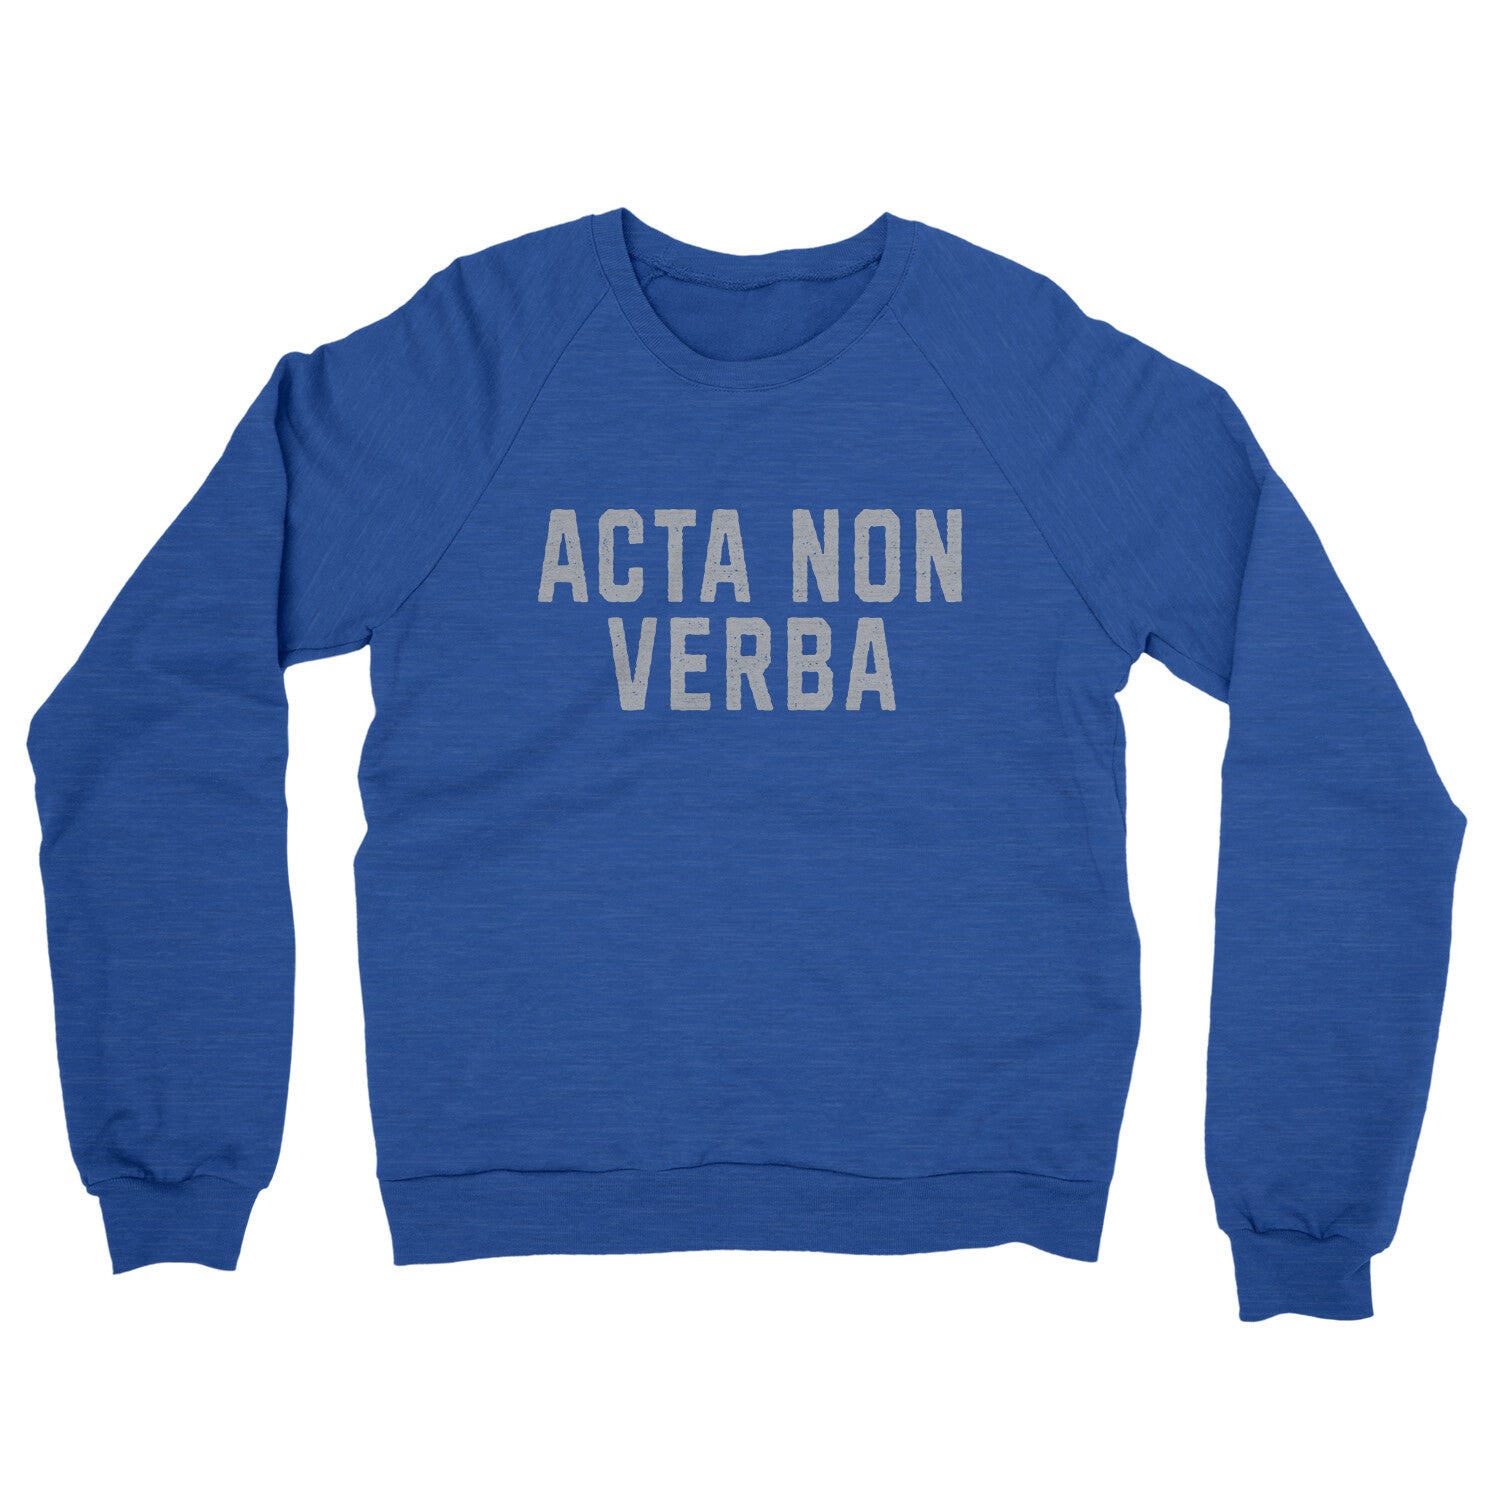 Acta Non Verba in Heather Royal Color